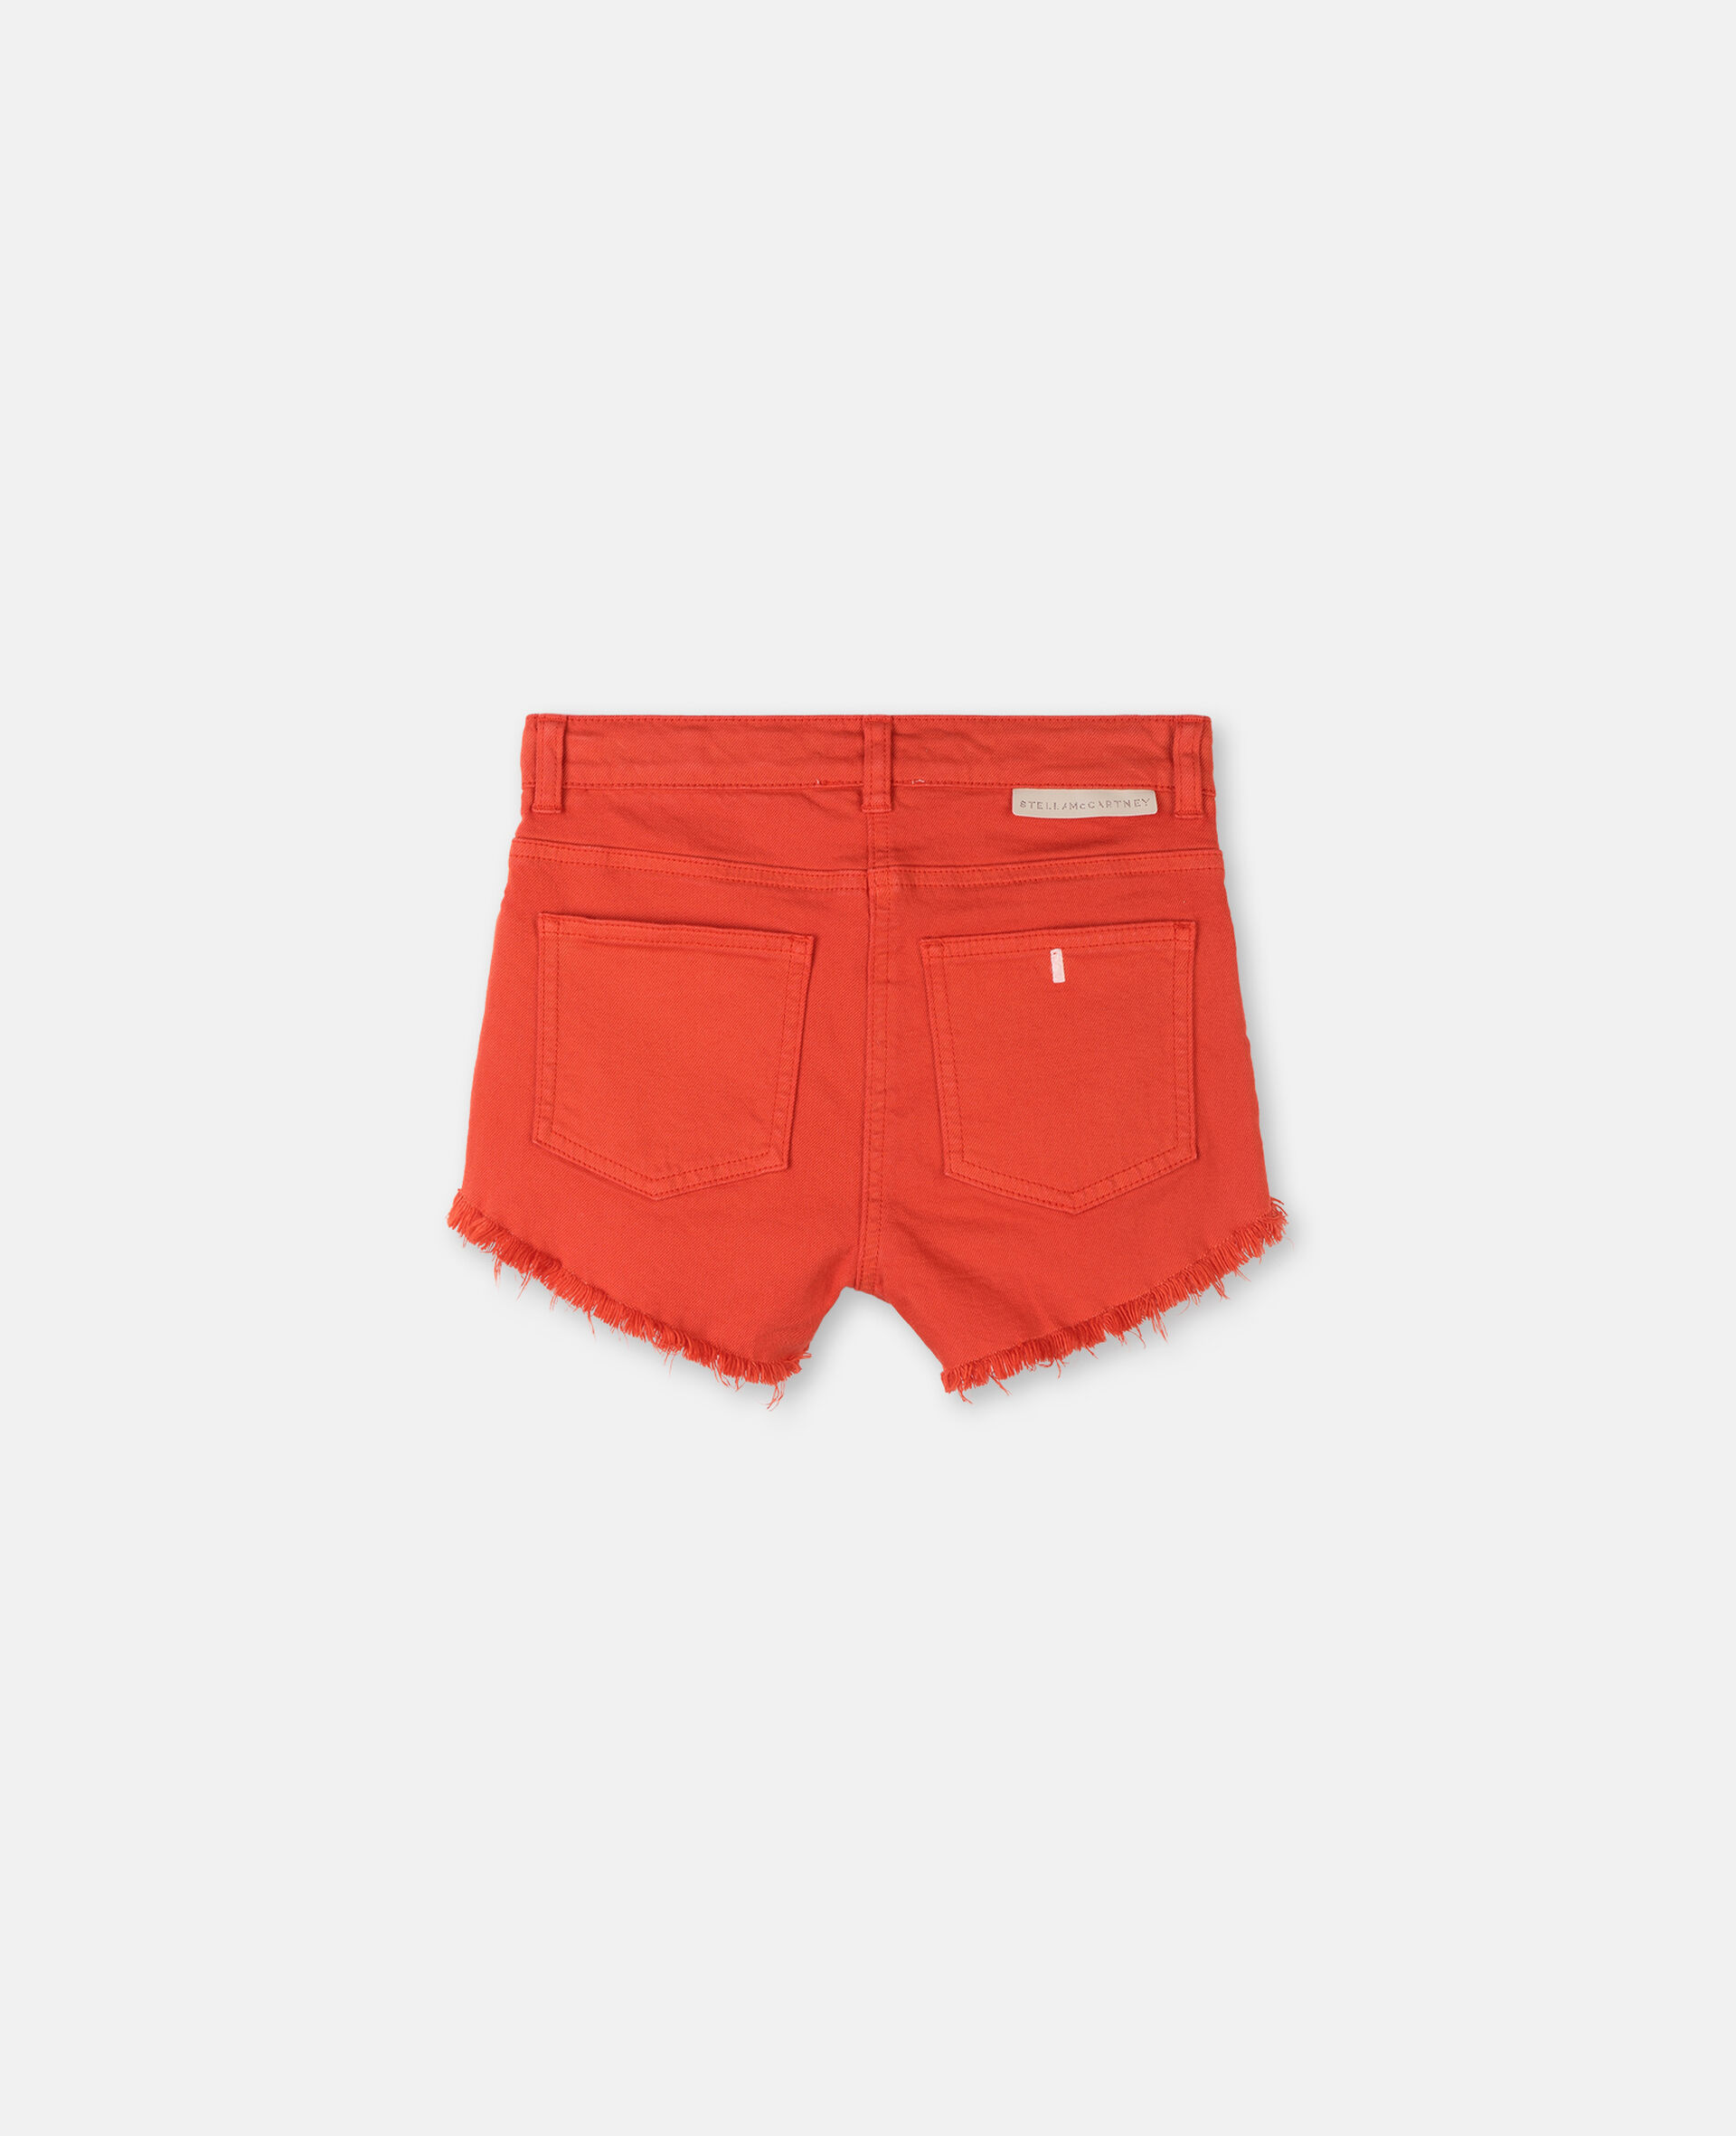 Denim Red Shorts -Red-large image number 3